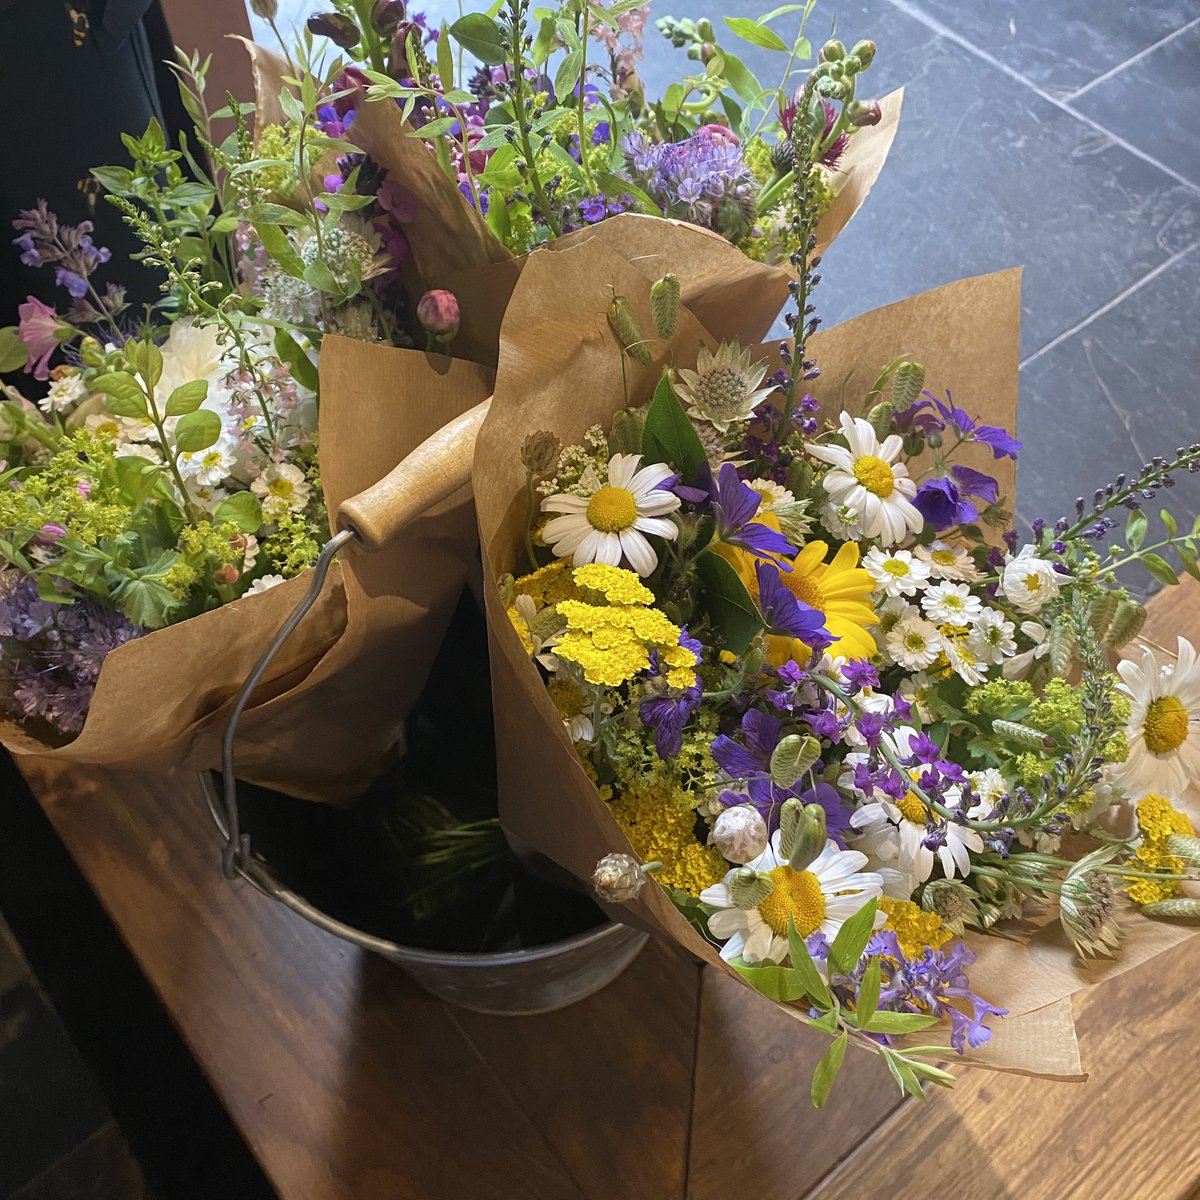 Fresh Friday flowers are back #whaleybridge #shoplocal #grownlocal #highpeak #freshflowers